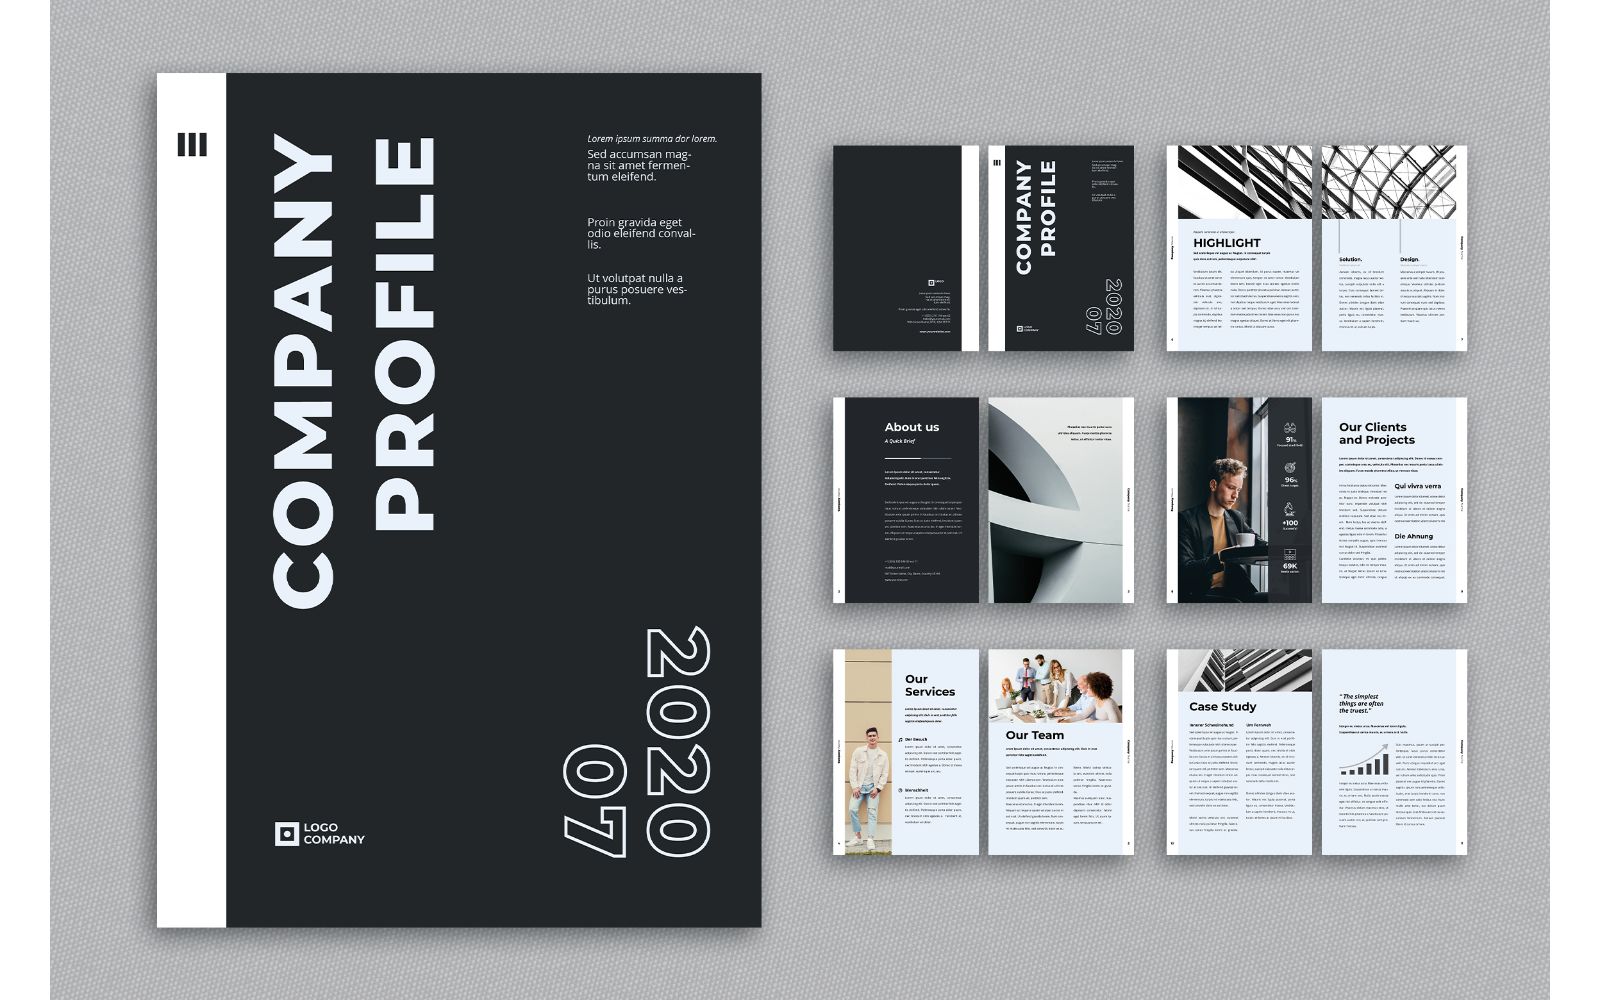 Company Profile 2020 Theme - Black & White Theme